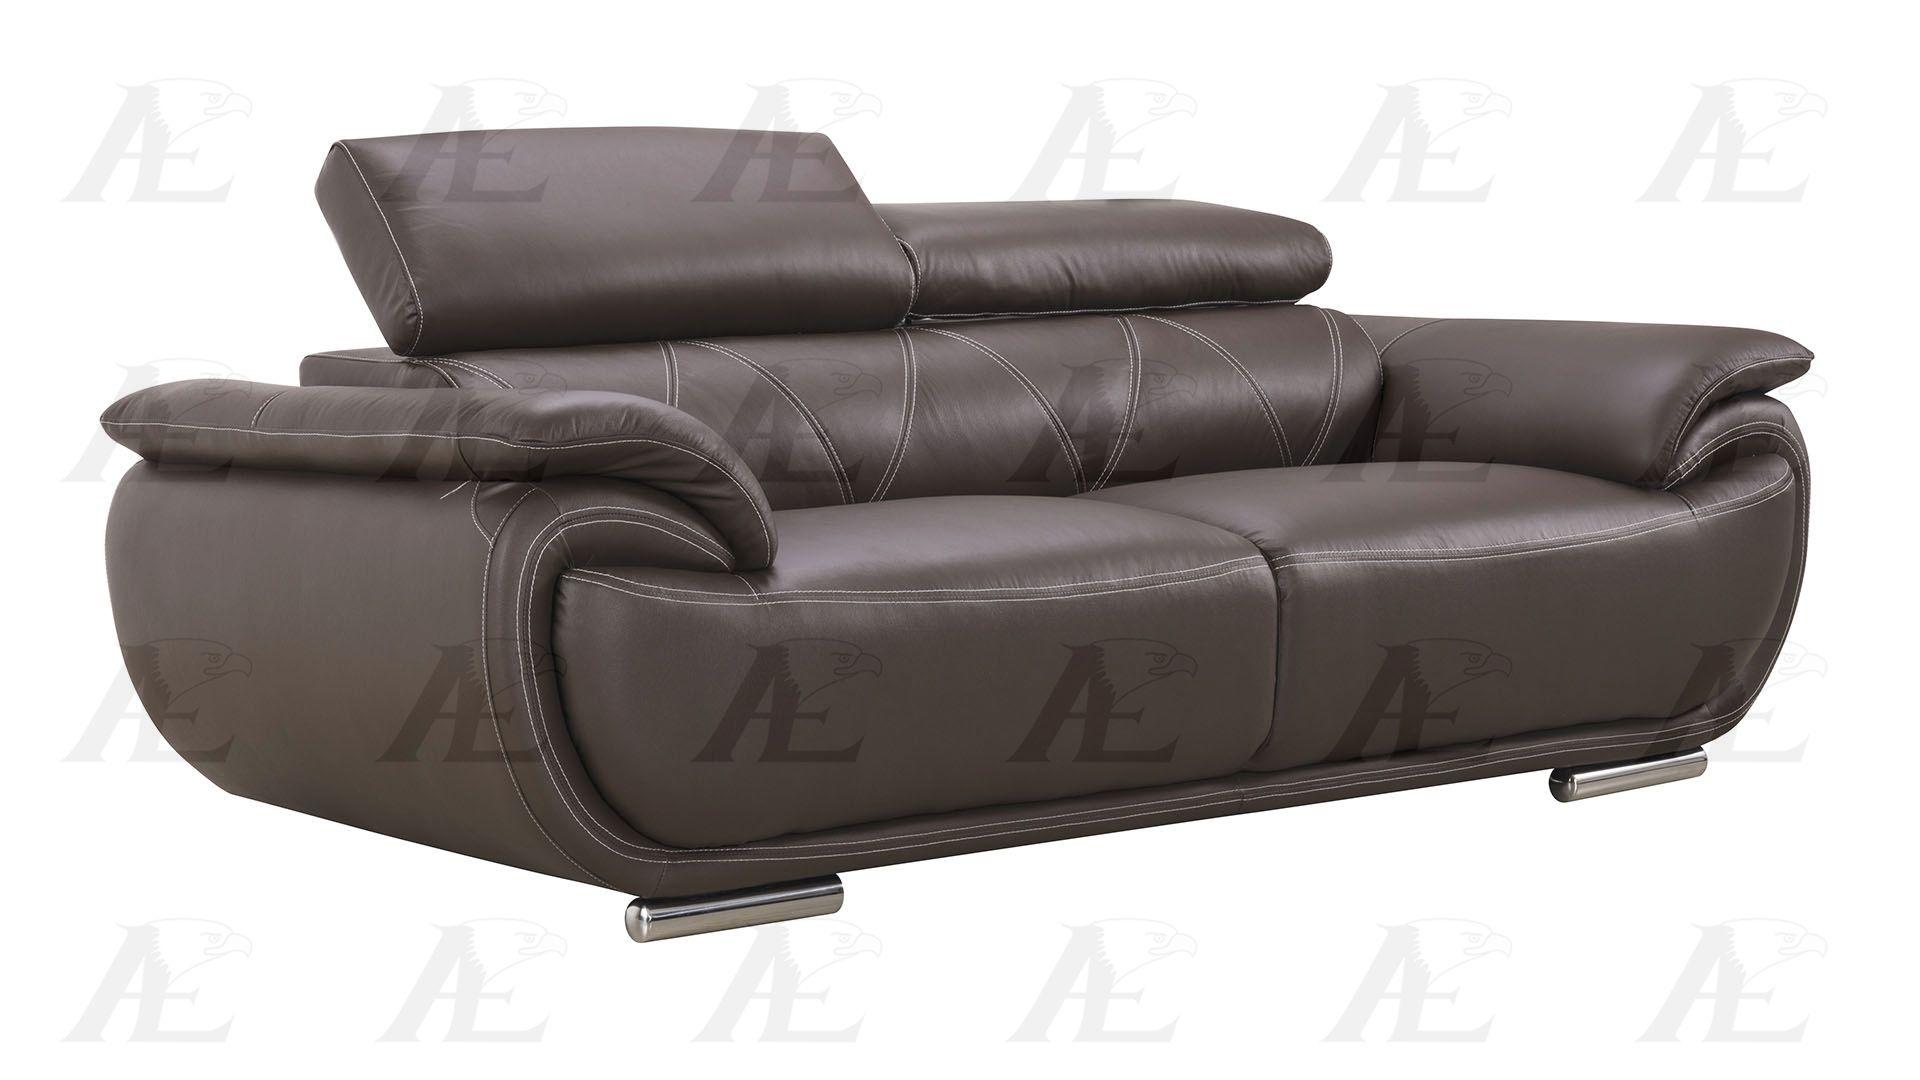 

    
EK511-DB Set-2 American Eagle Furniture Sofa and Loveseat Set
